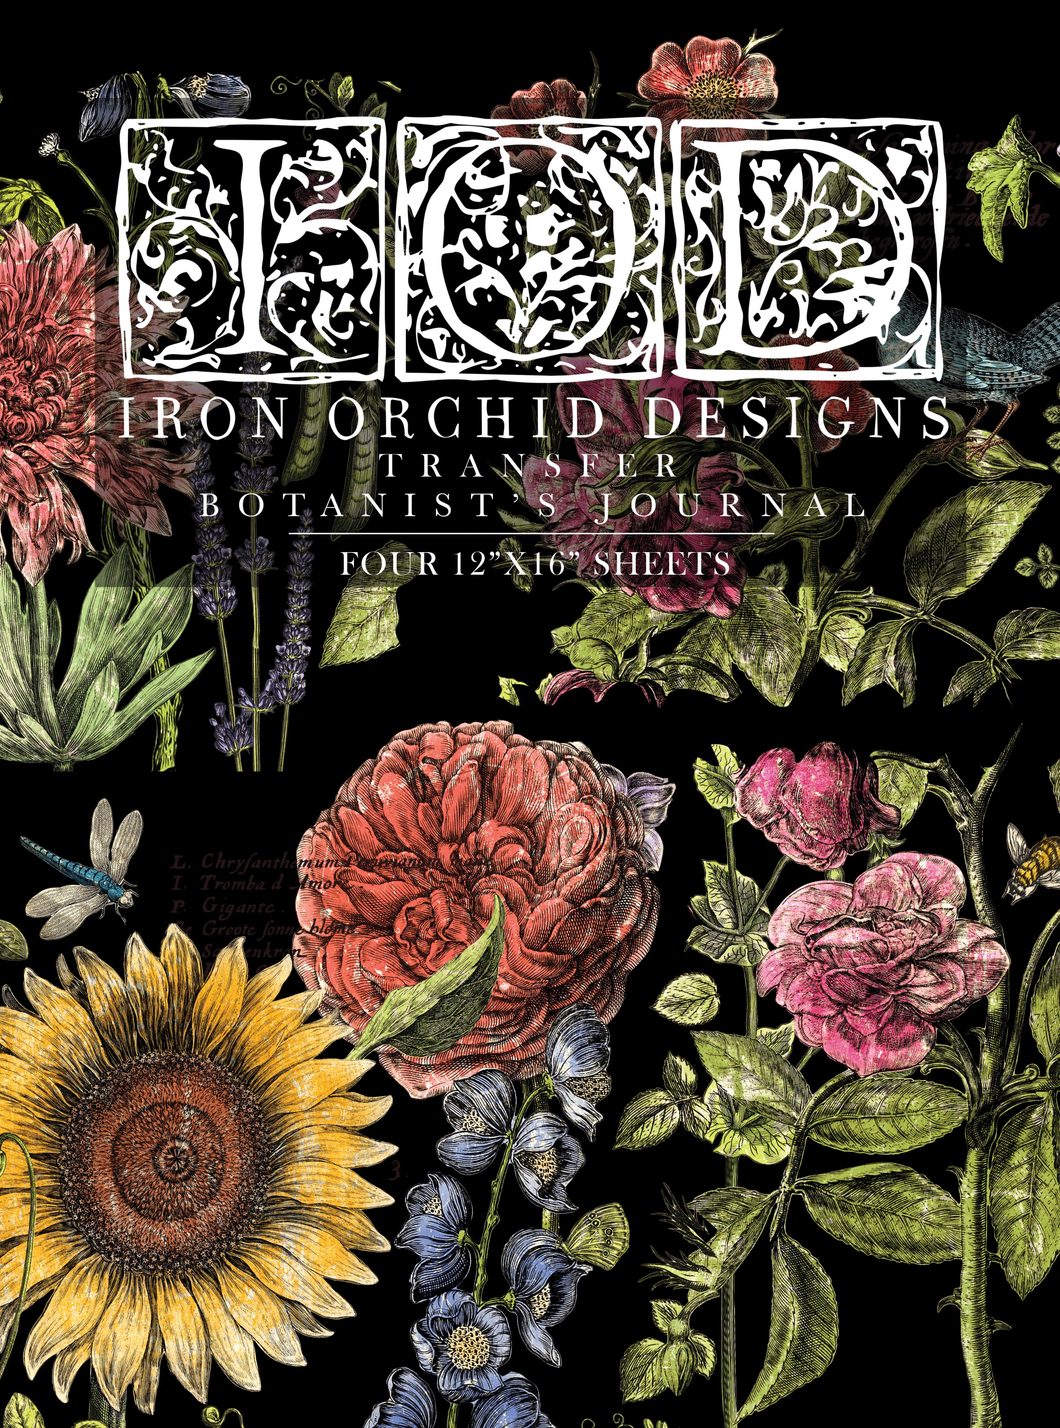 Iron Orchid Designs Botanist's Journal 4 Sheet Pad Decor Transfer, 12x16